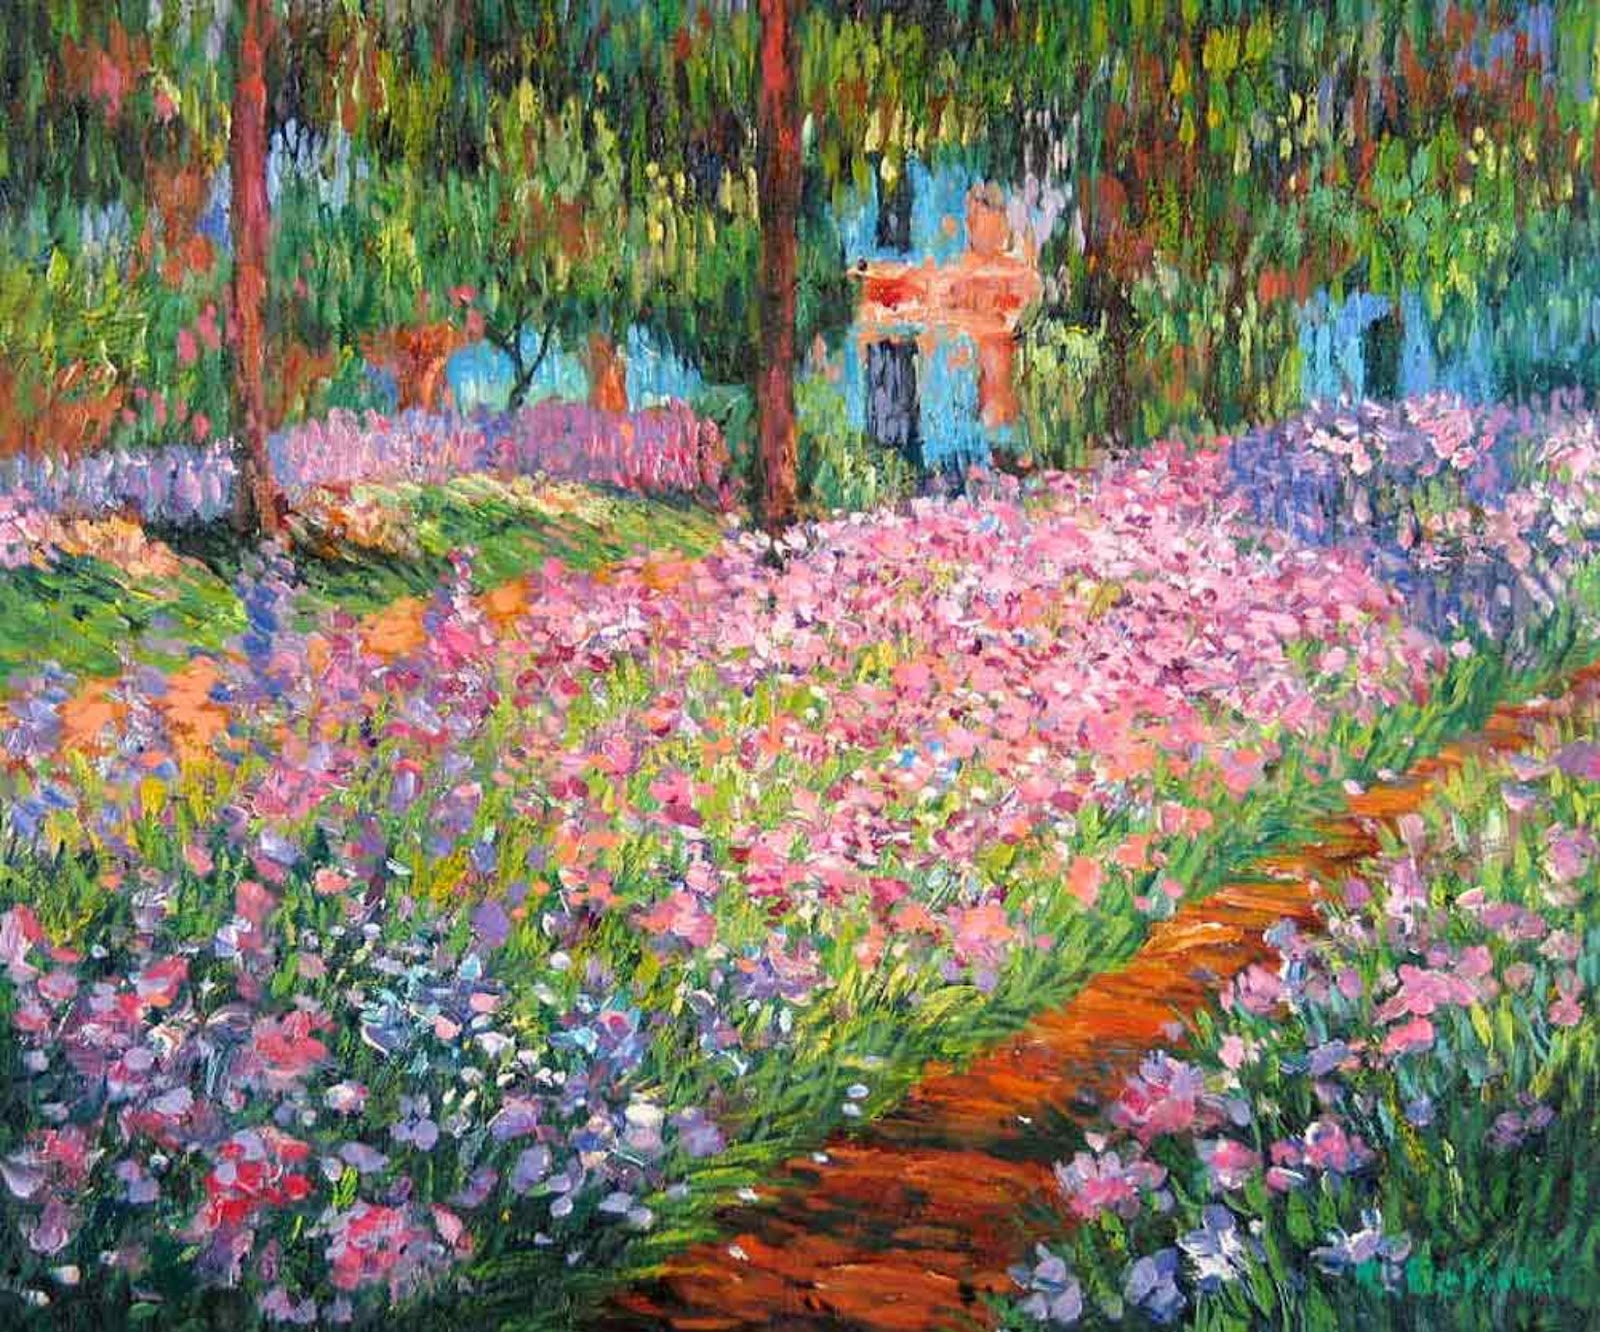 Claude Monet The Artists Garden at Giverny 1900 nurlailiatulmachmudah